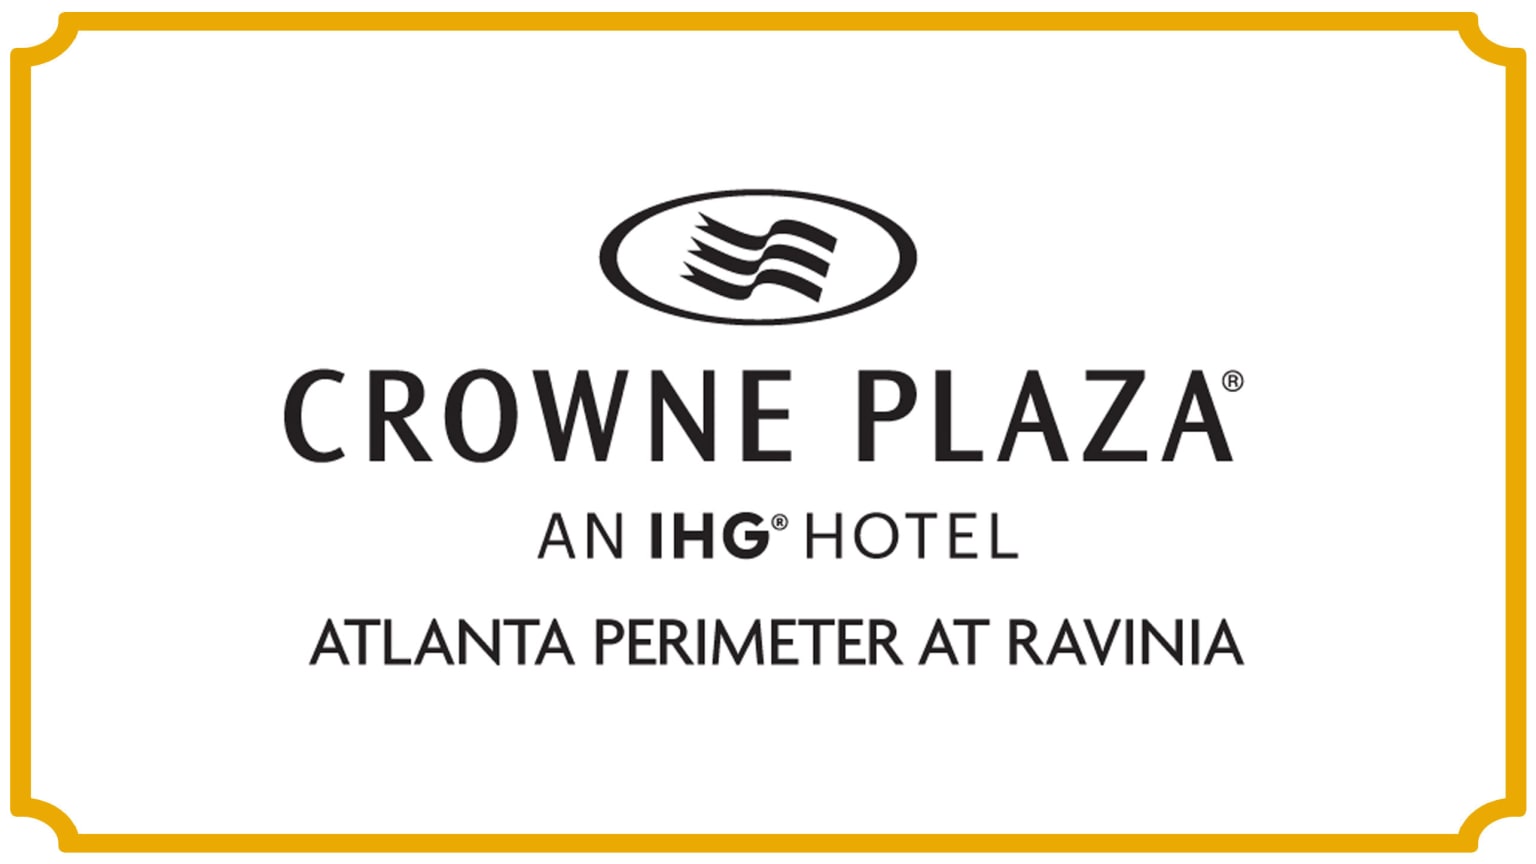 Crowne Plaza Philadelphia | King of Prussia - PM Hotel Group